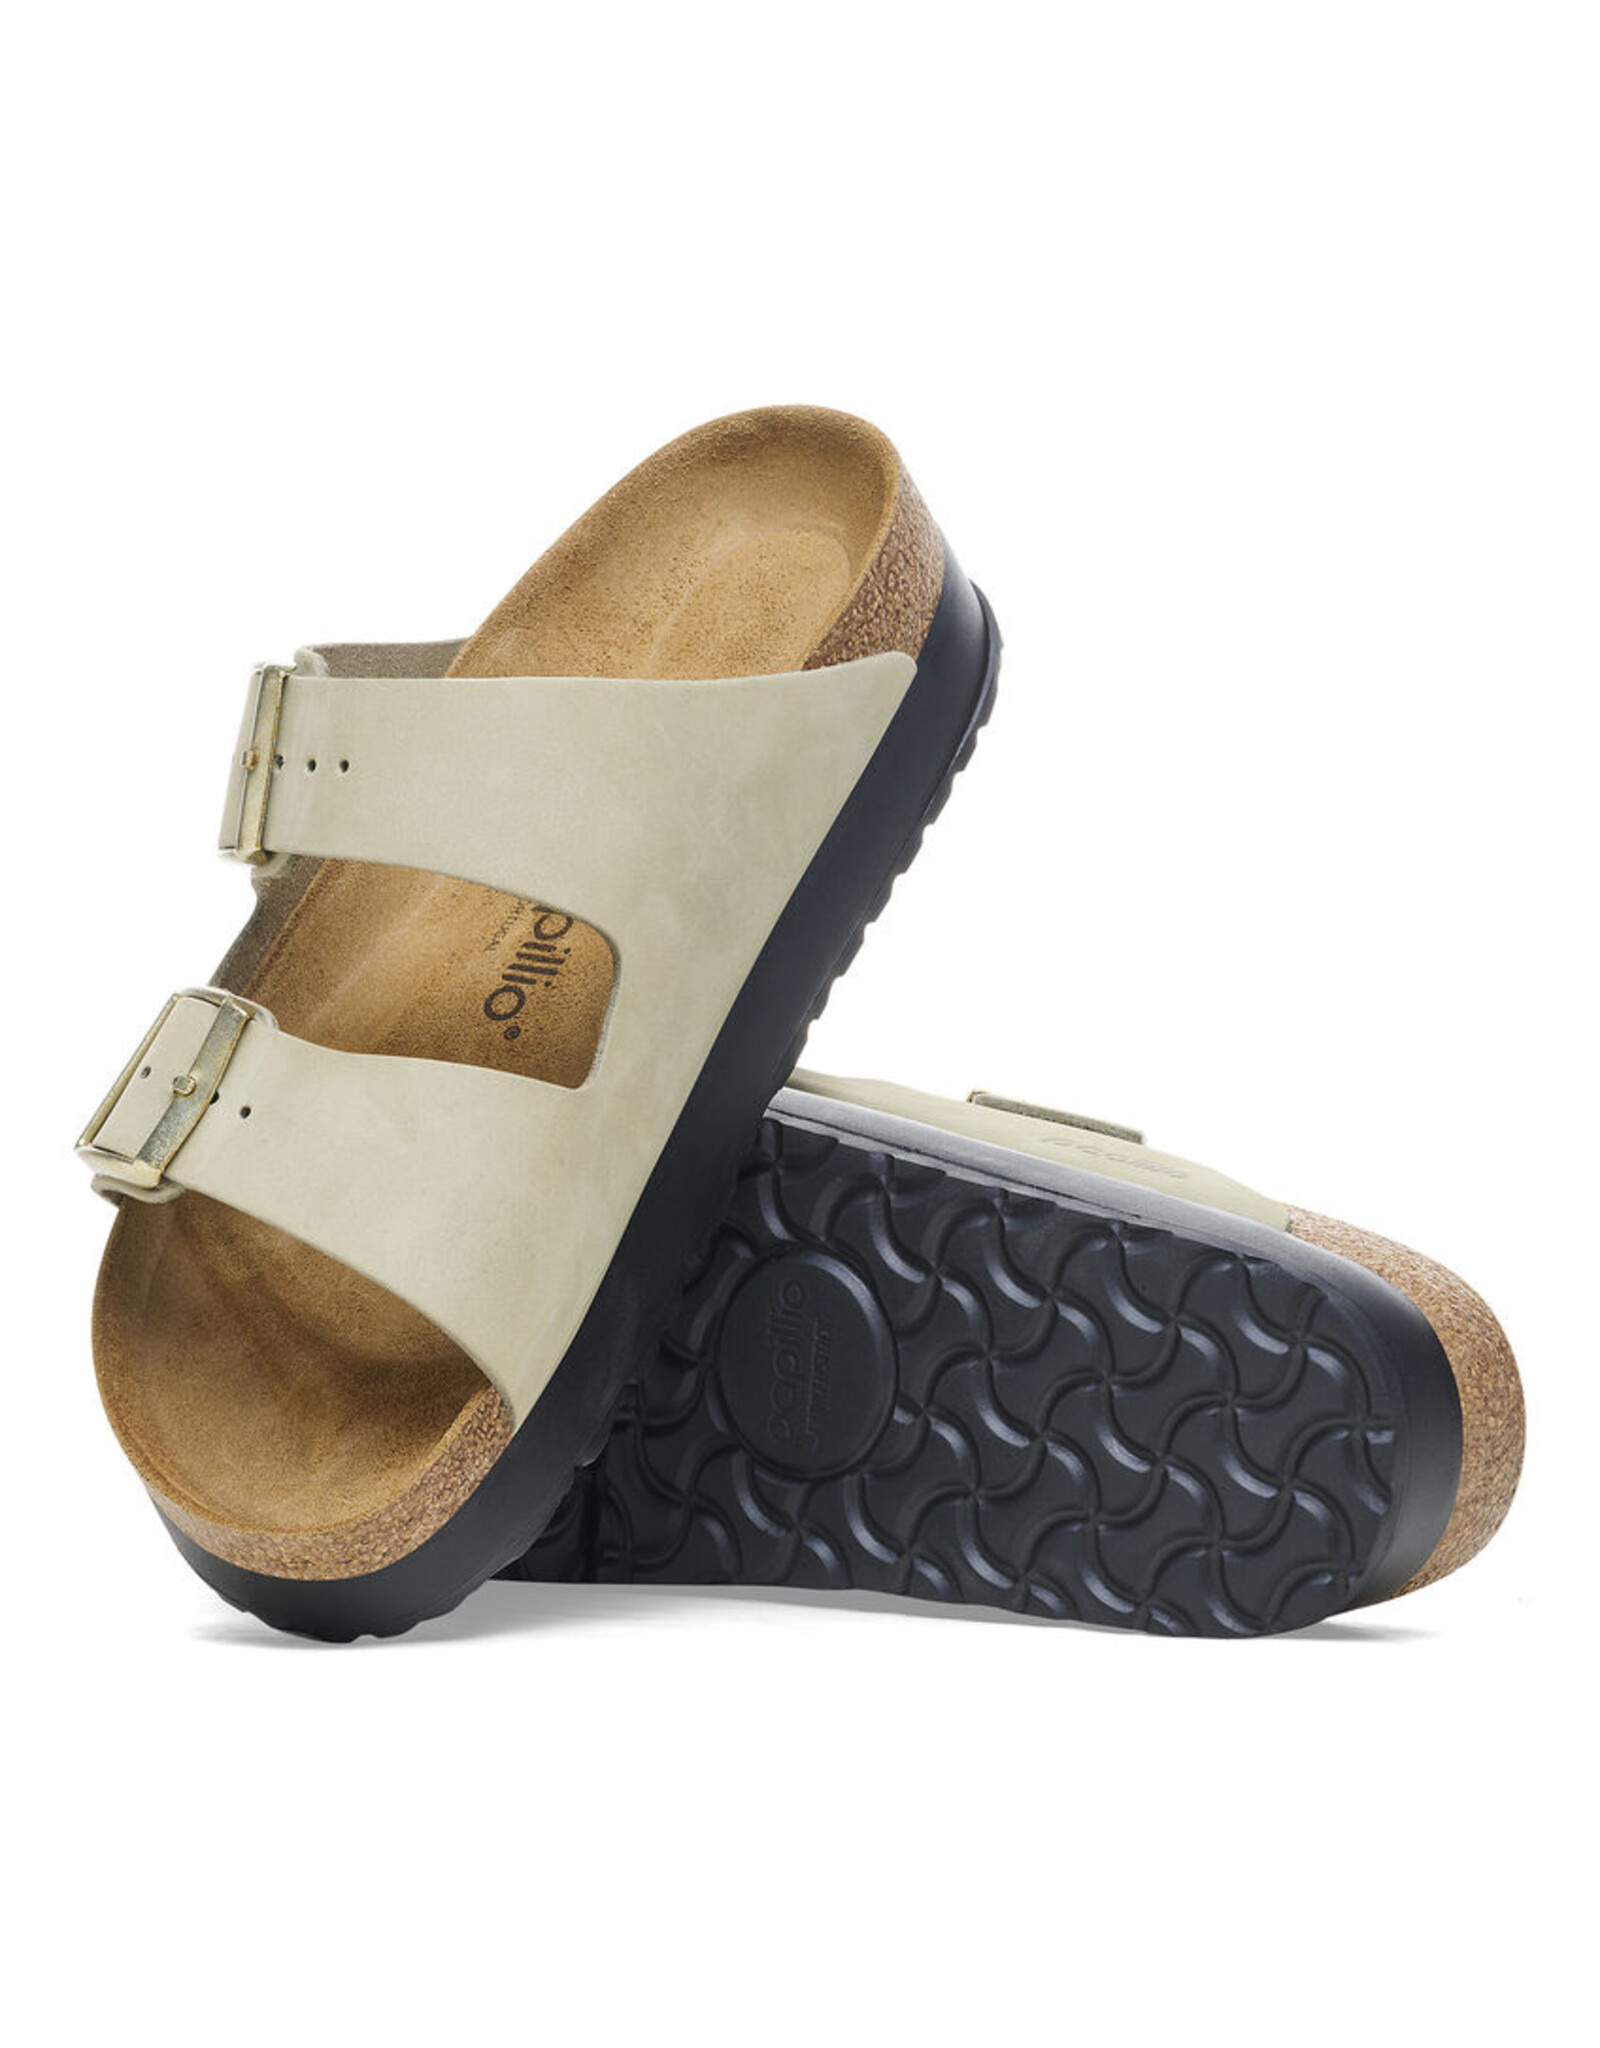 Birkenstock Arizona Flex Nubuck Leather Platform Sandal